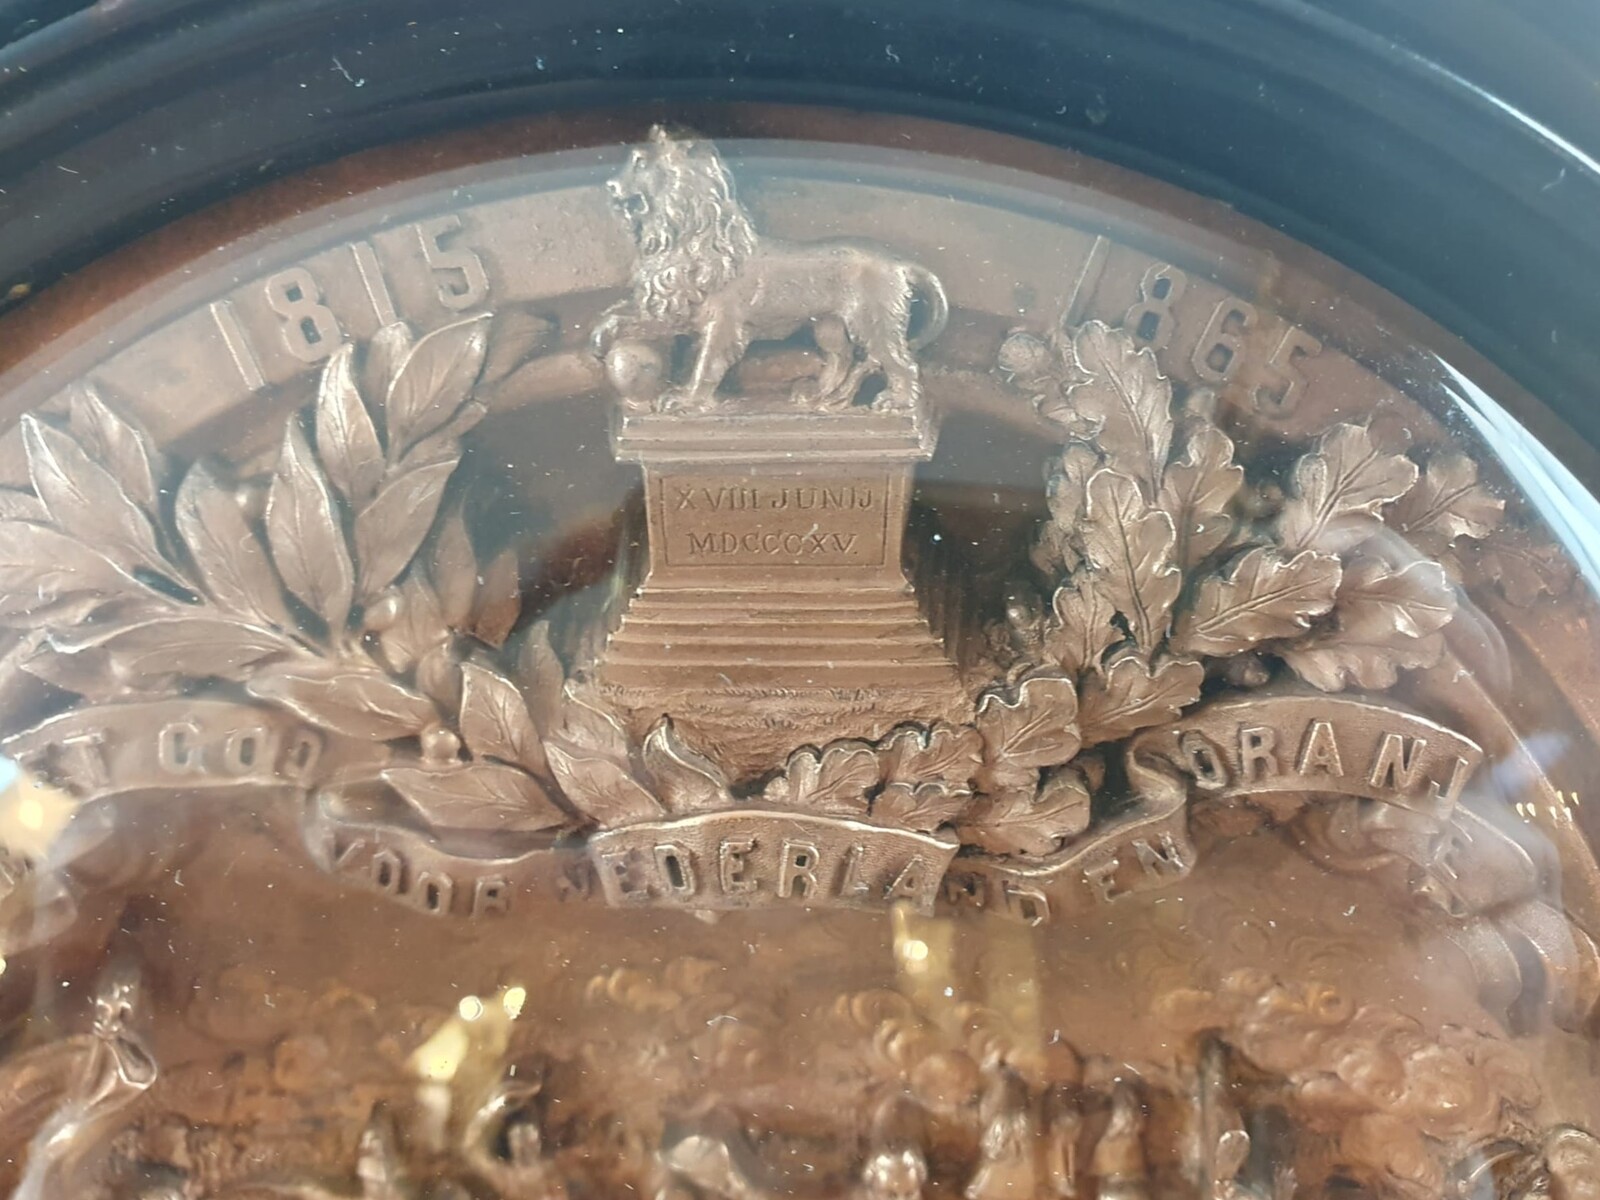 Commemorative medallion published in 1865